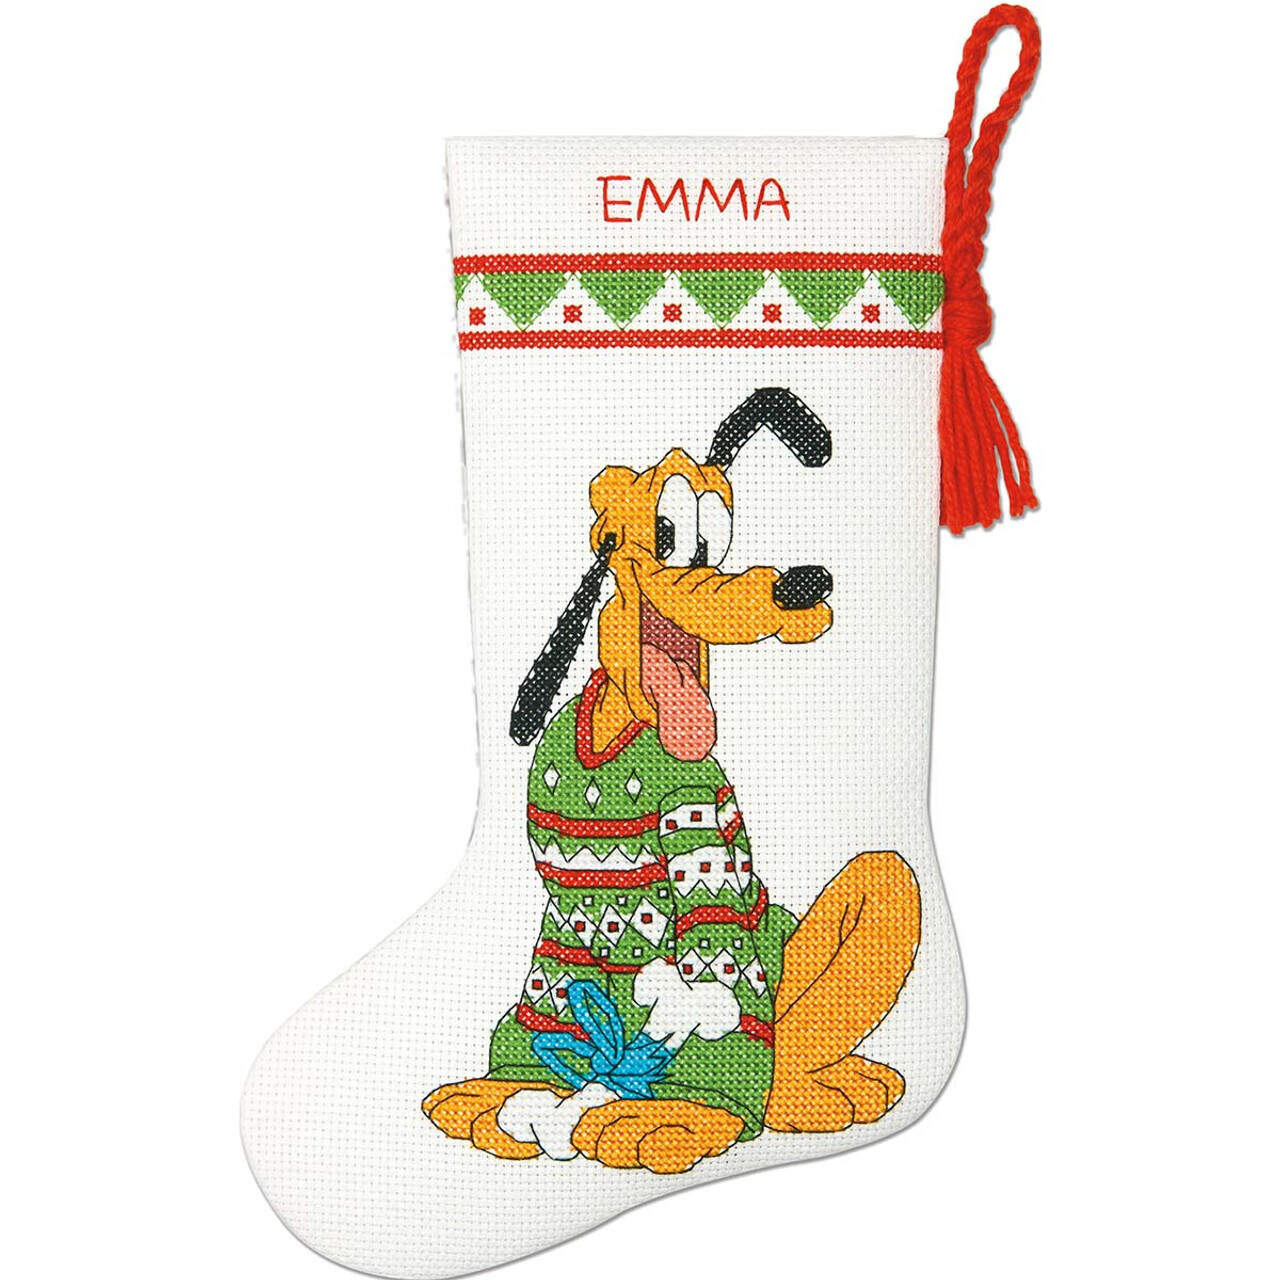 Pluto Cross Stitch Stocking Kit: Includes: Thread, 14 Count Aida